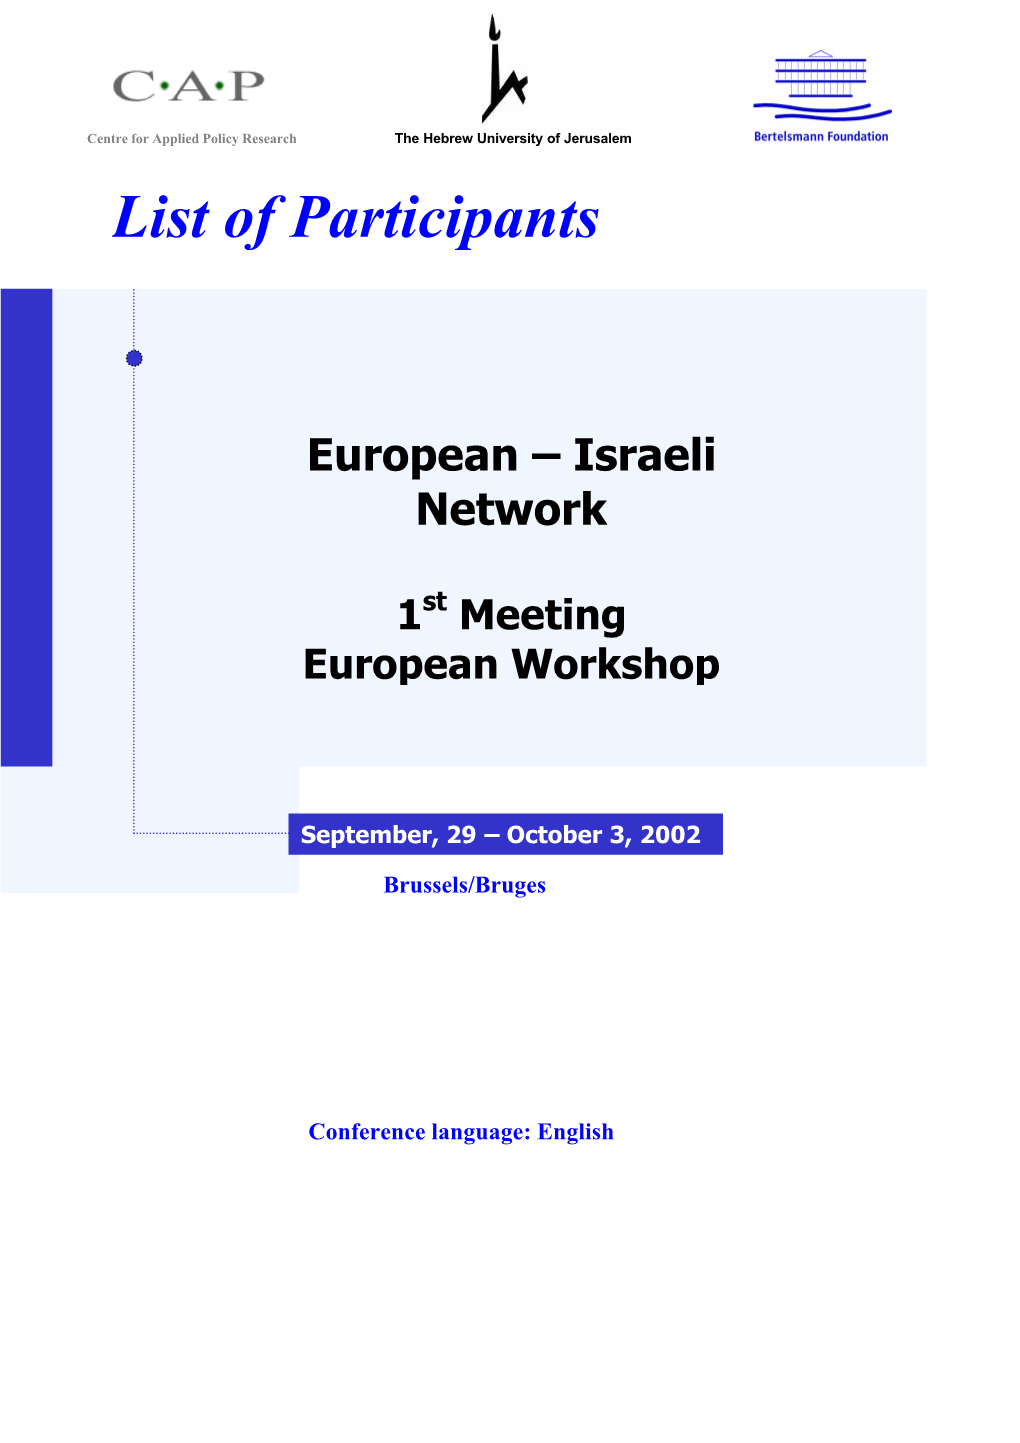 European – Israeli Network